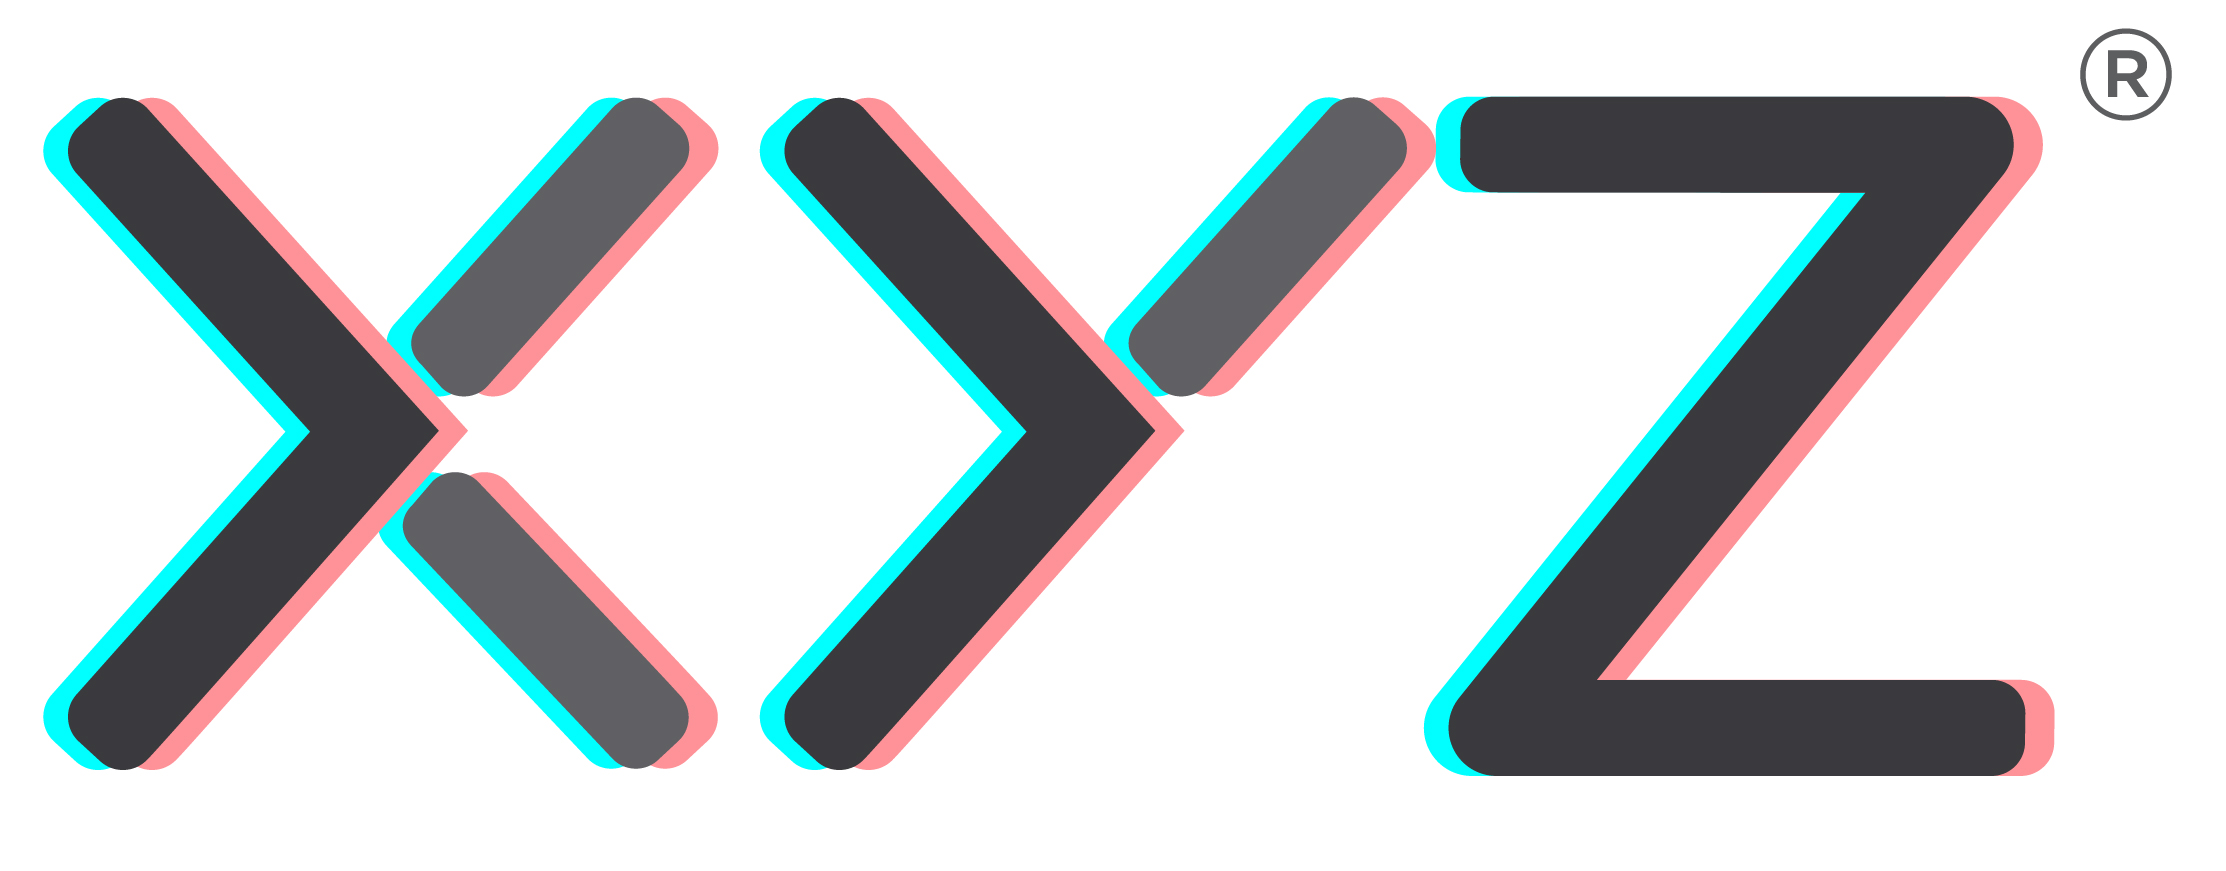 Https m xyz. Xyz лого. X Y Z логотип. Поколение z эмблема.